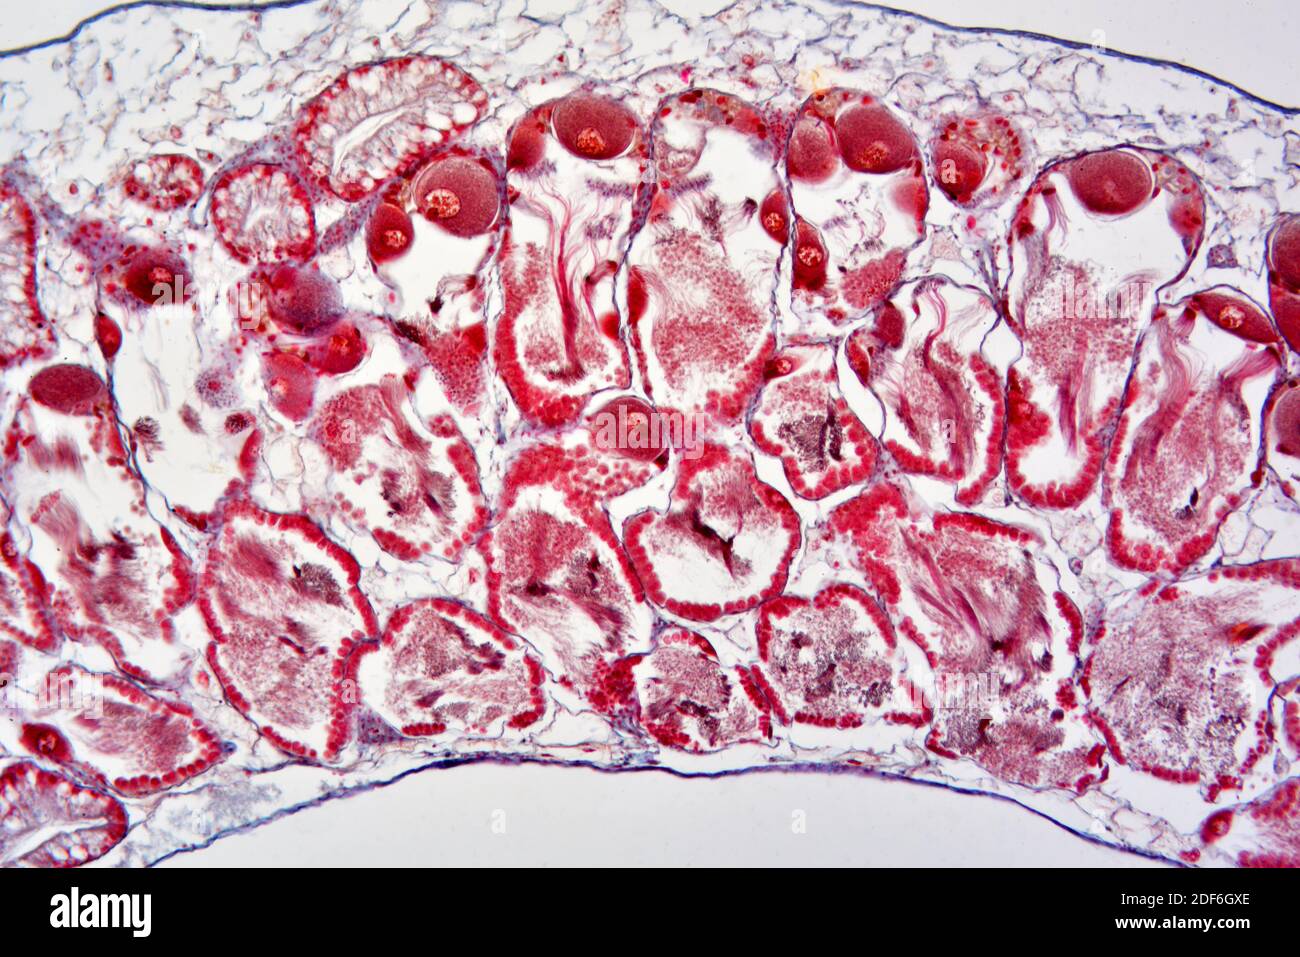 Lumaca romana (Helix pomatia), ghiandola ermafrodite (ovotestis). Microscopio ottico X100. Foto Stock